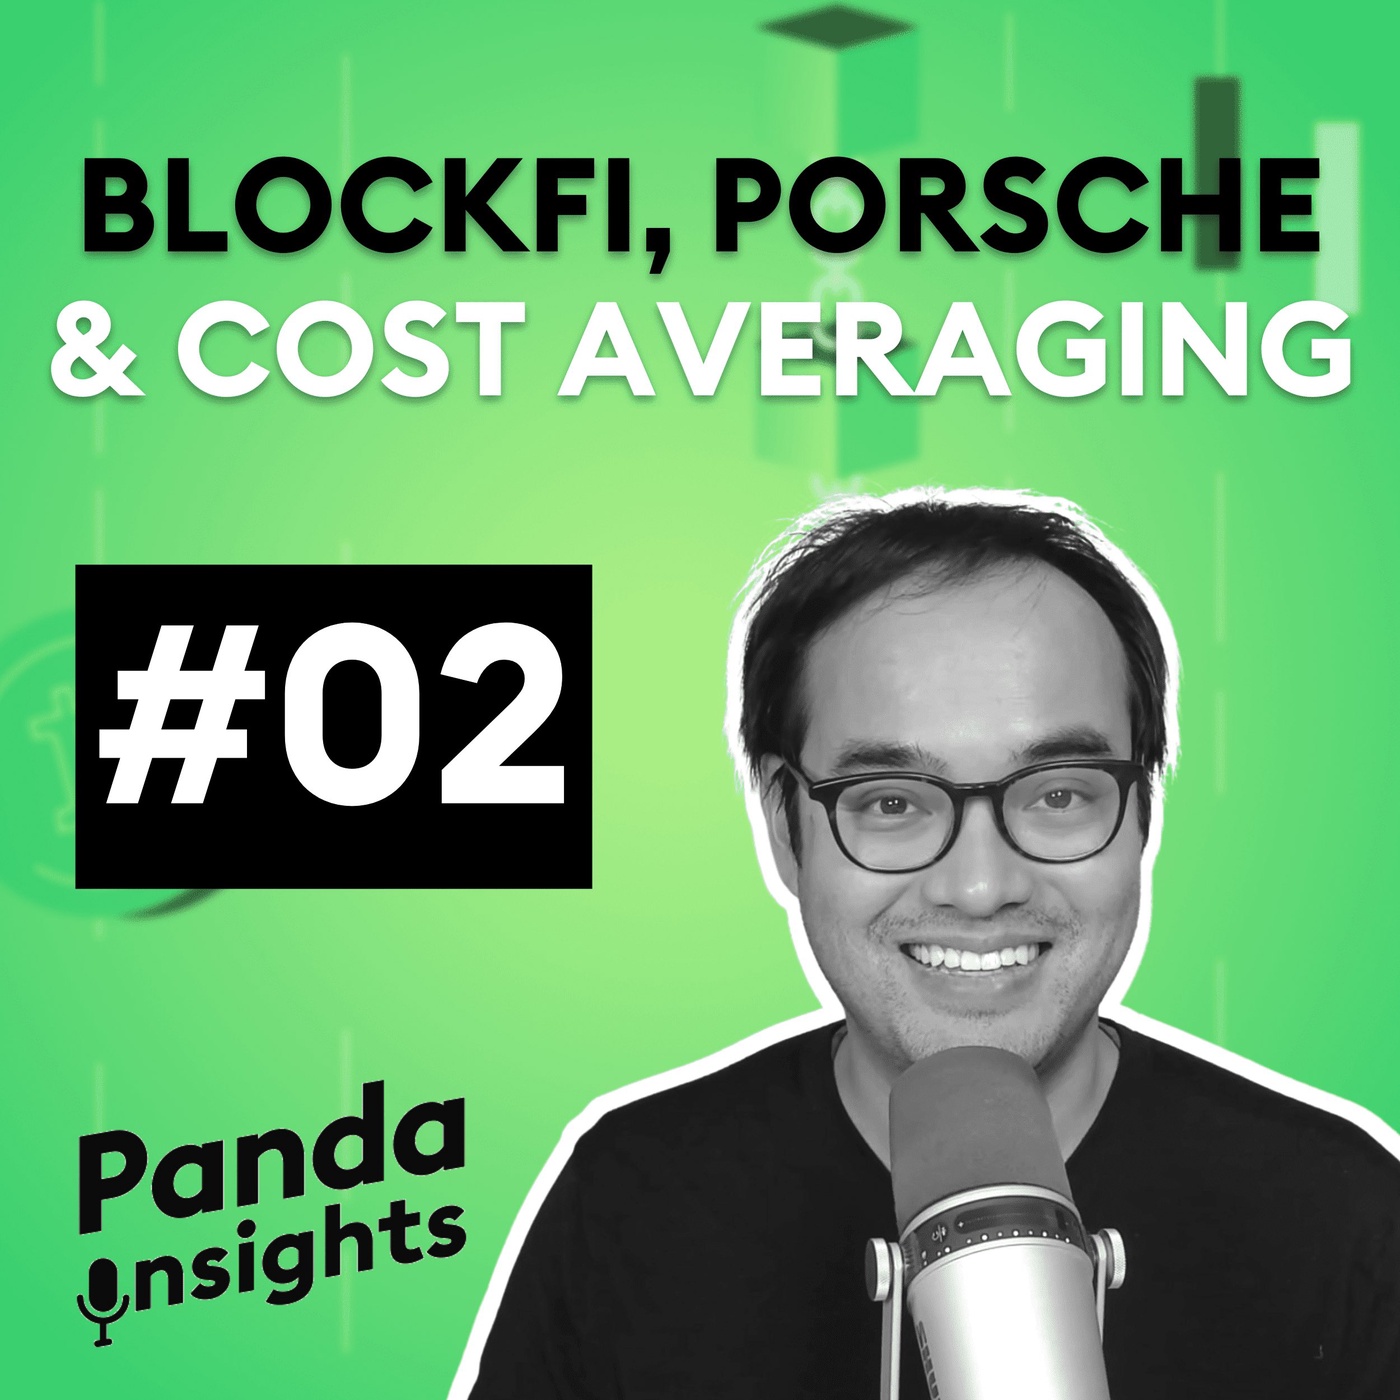 BlockFi, Porsche & Cost Averaging